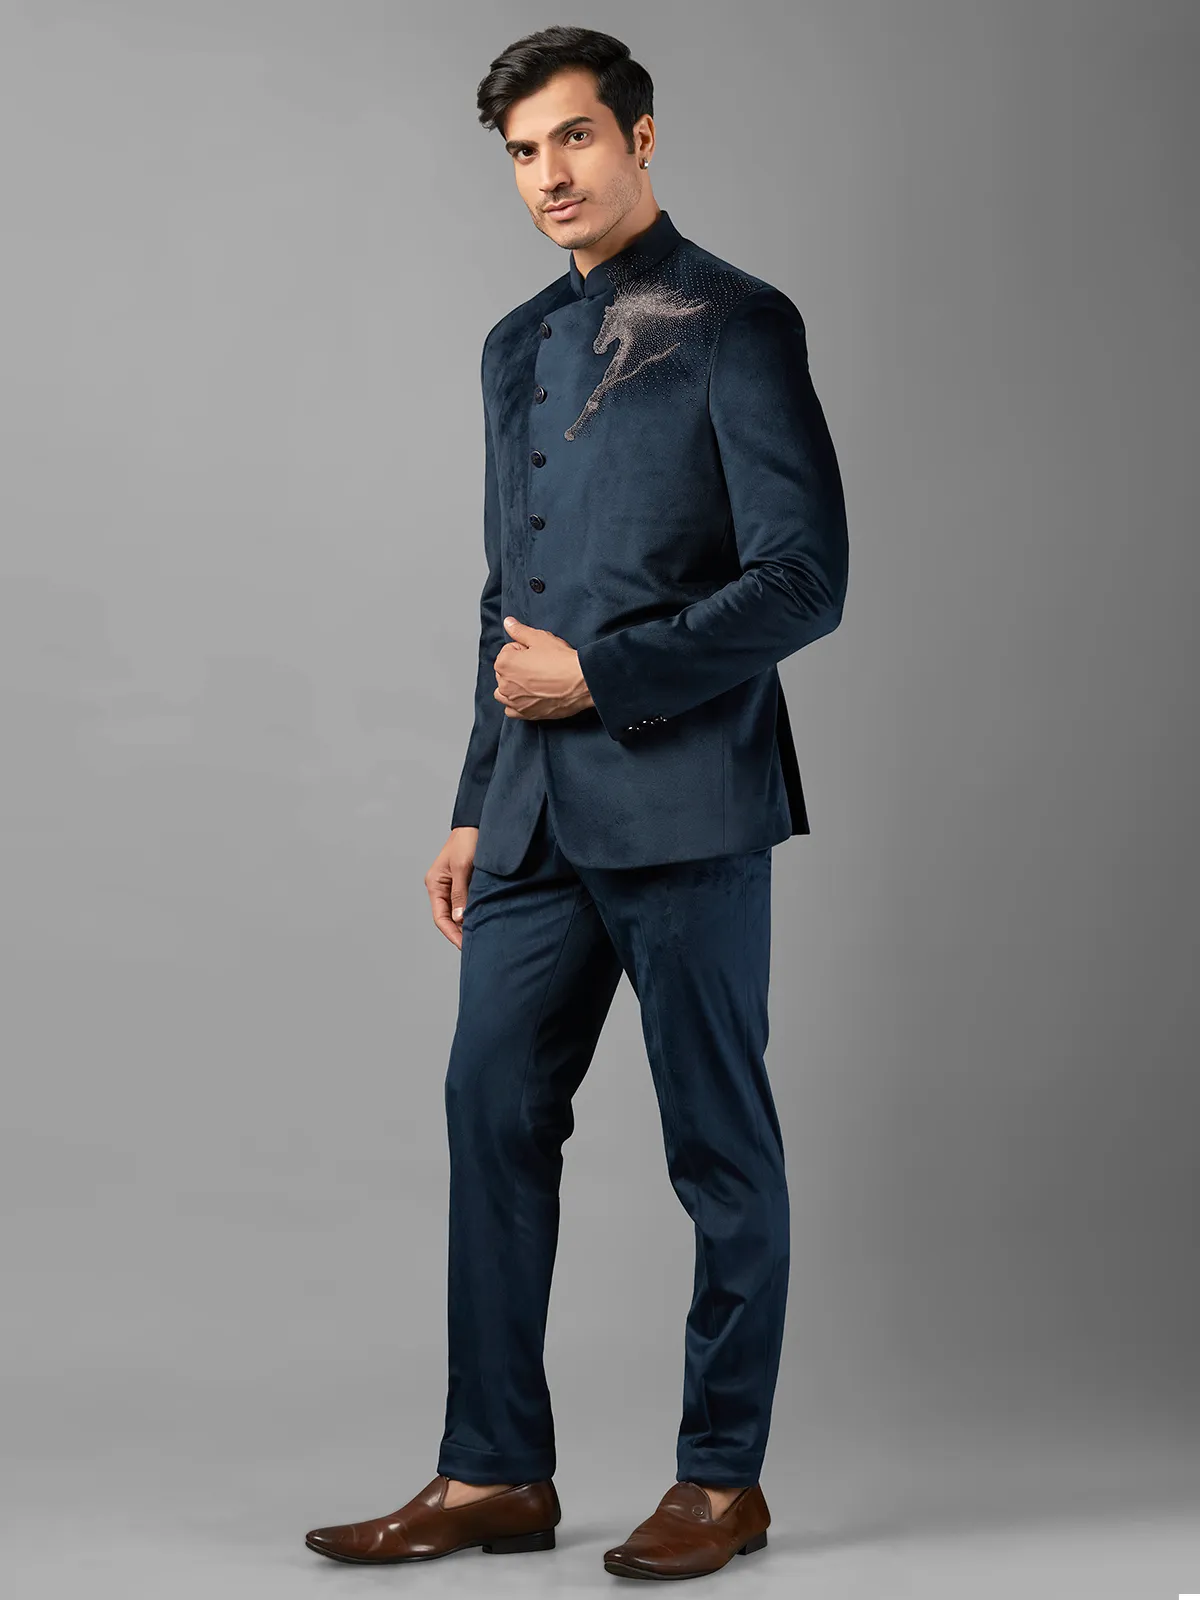 Elegant navy suede jodhpuri suit